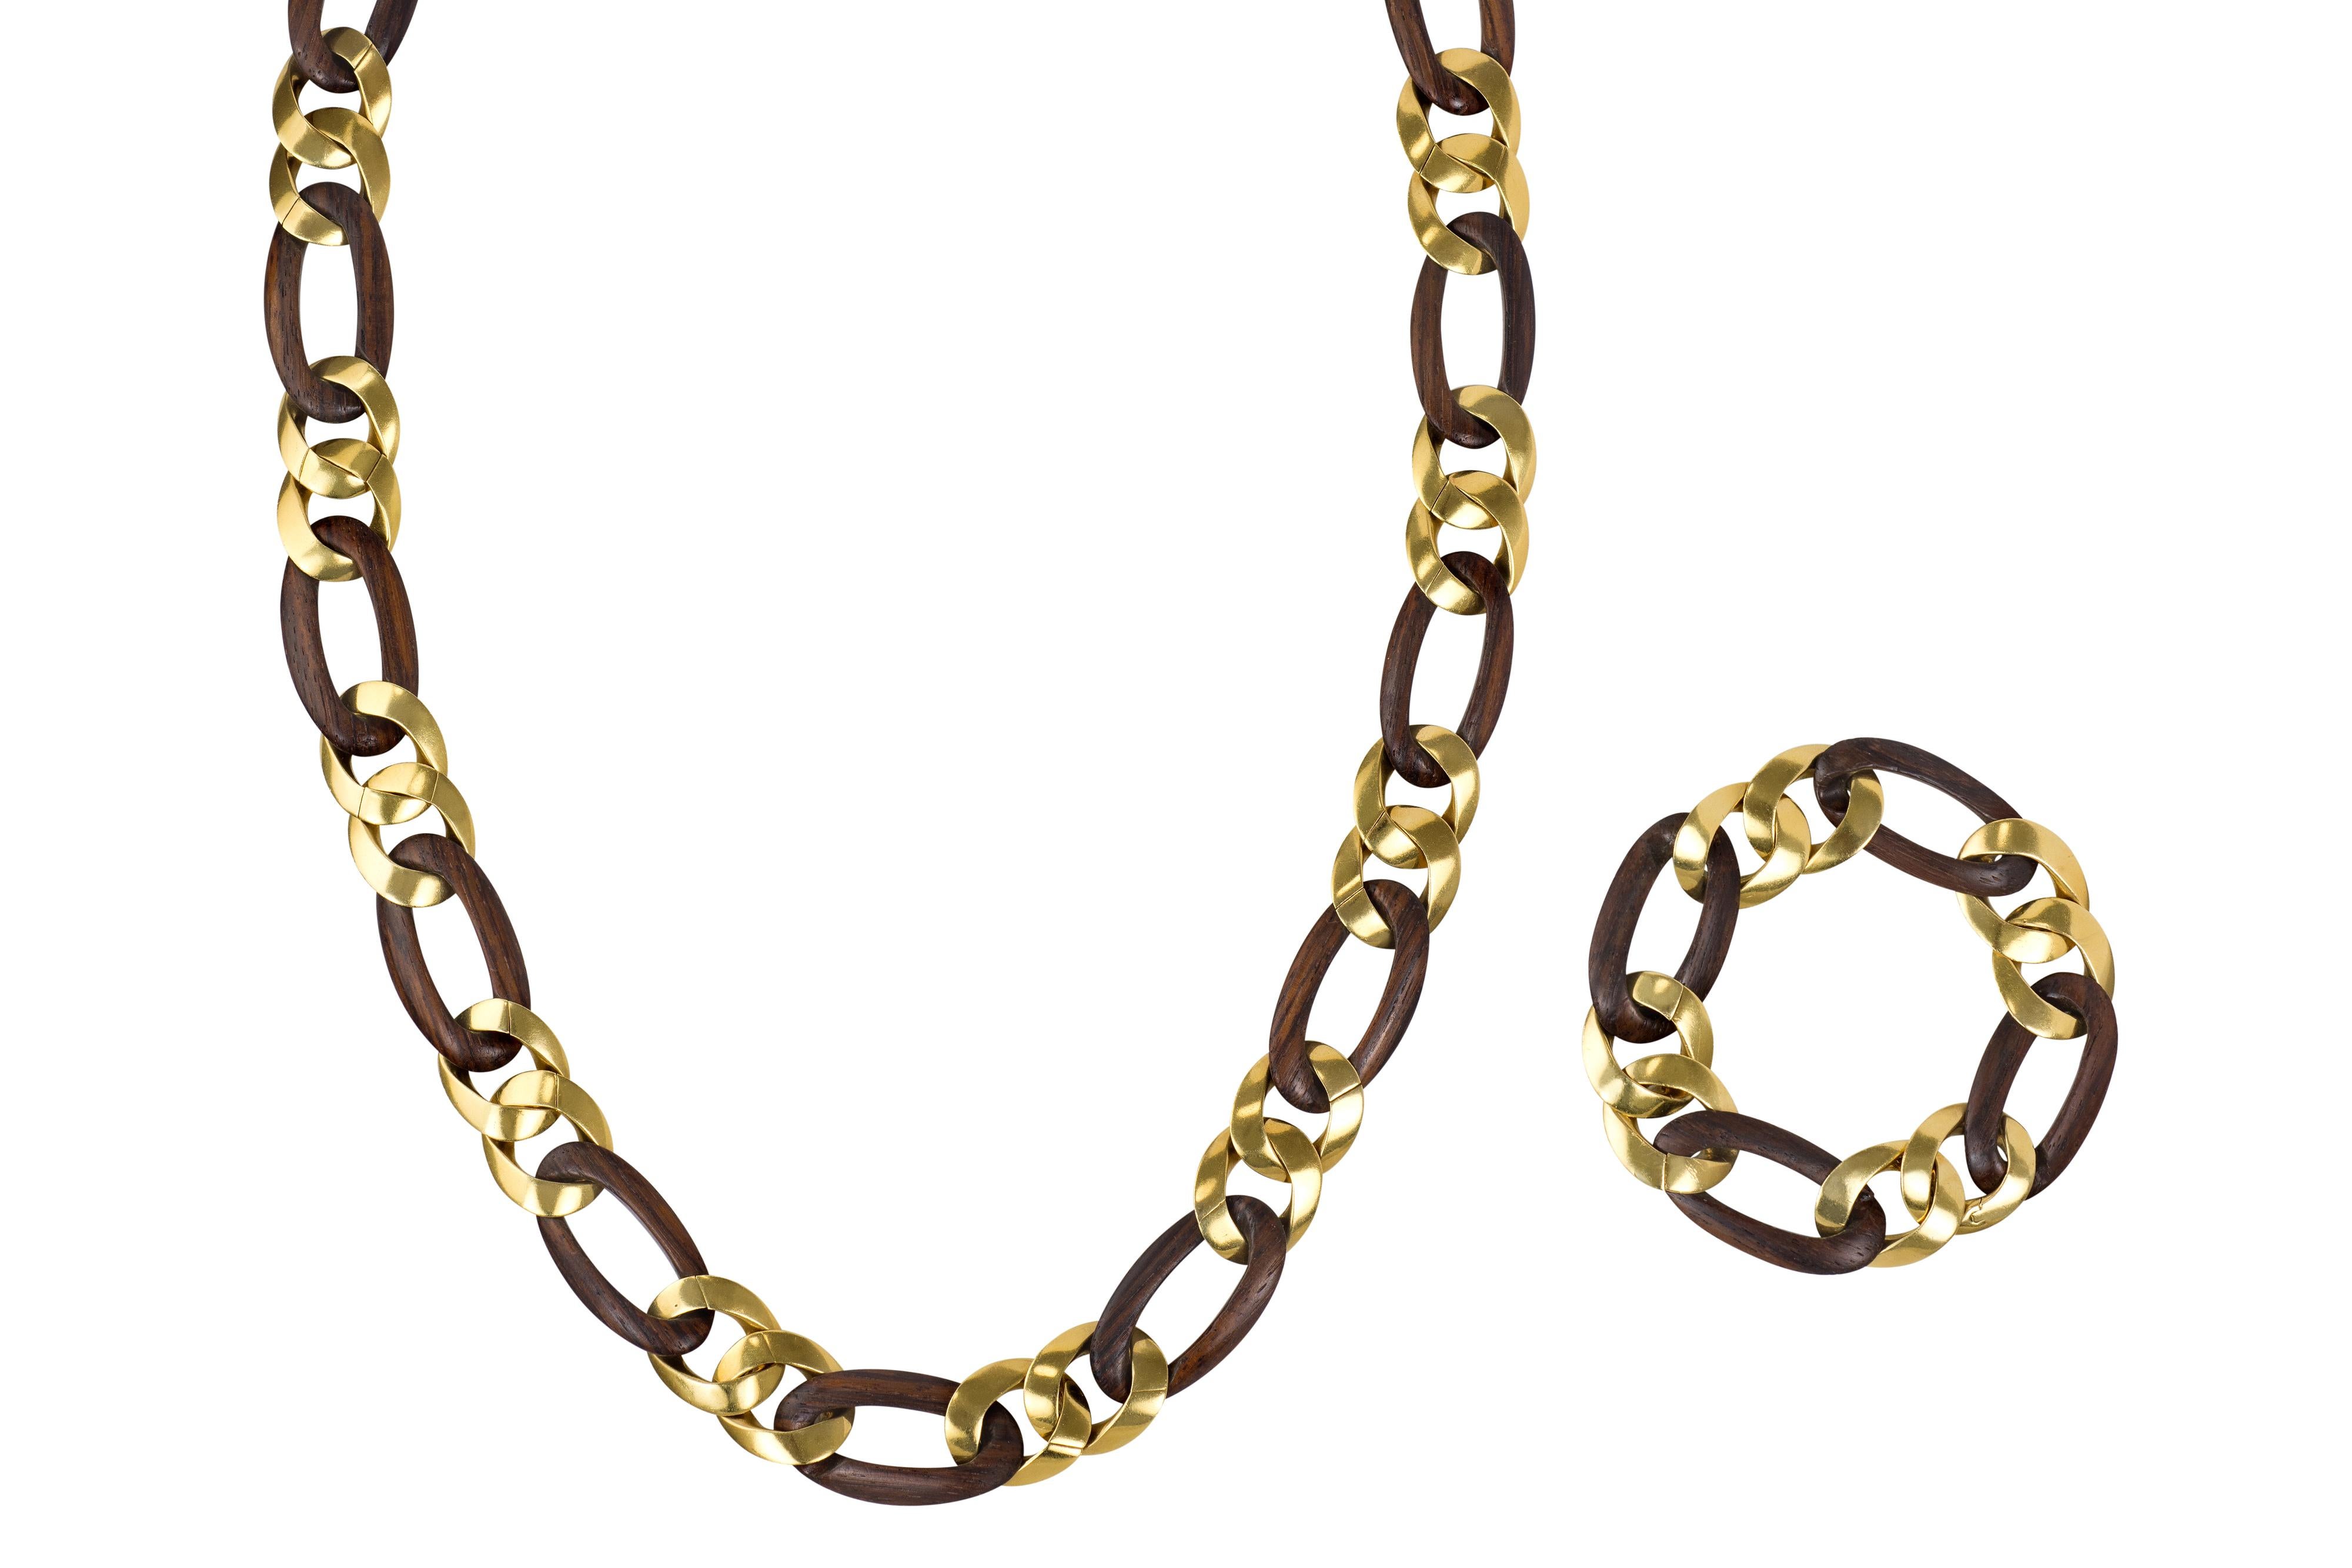 A wood and 18 karat gold sautoir, with detachable bracelet, 1970s. The necklace length is 25.75